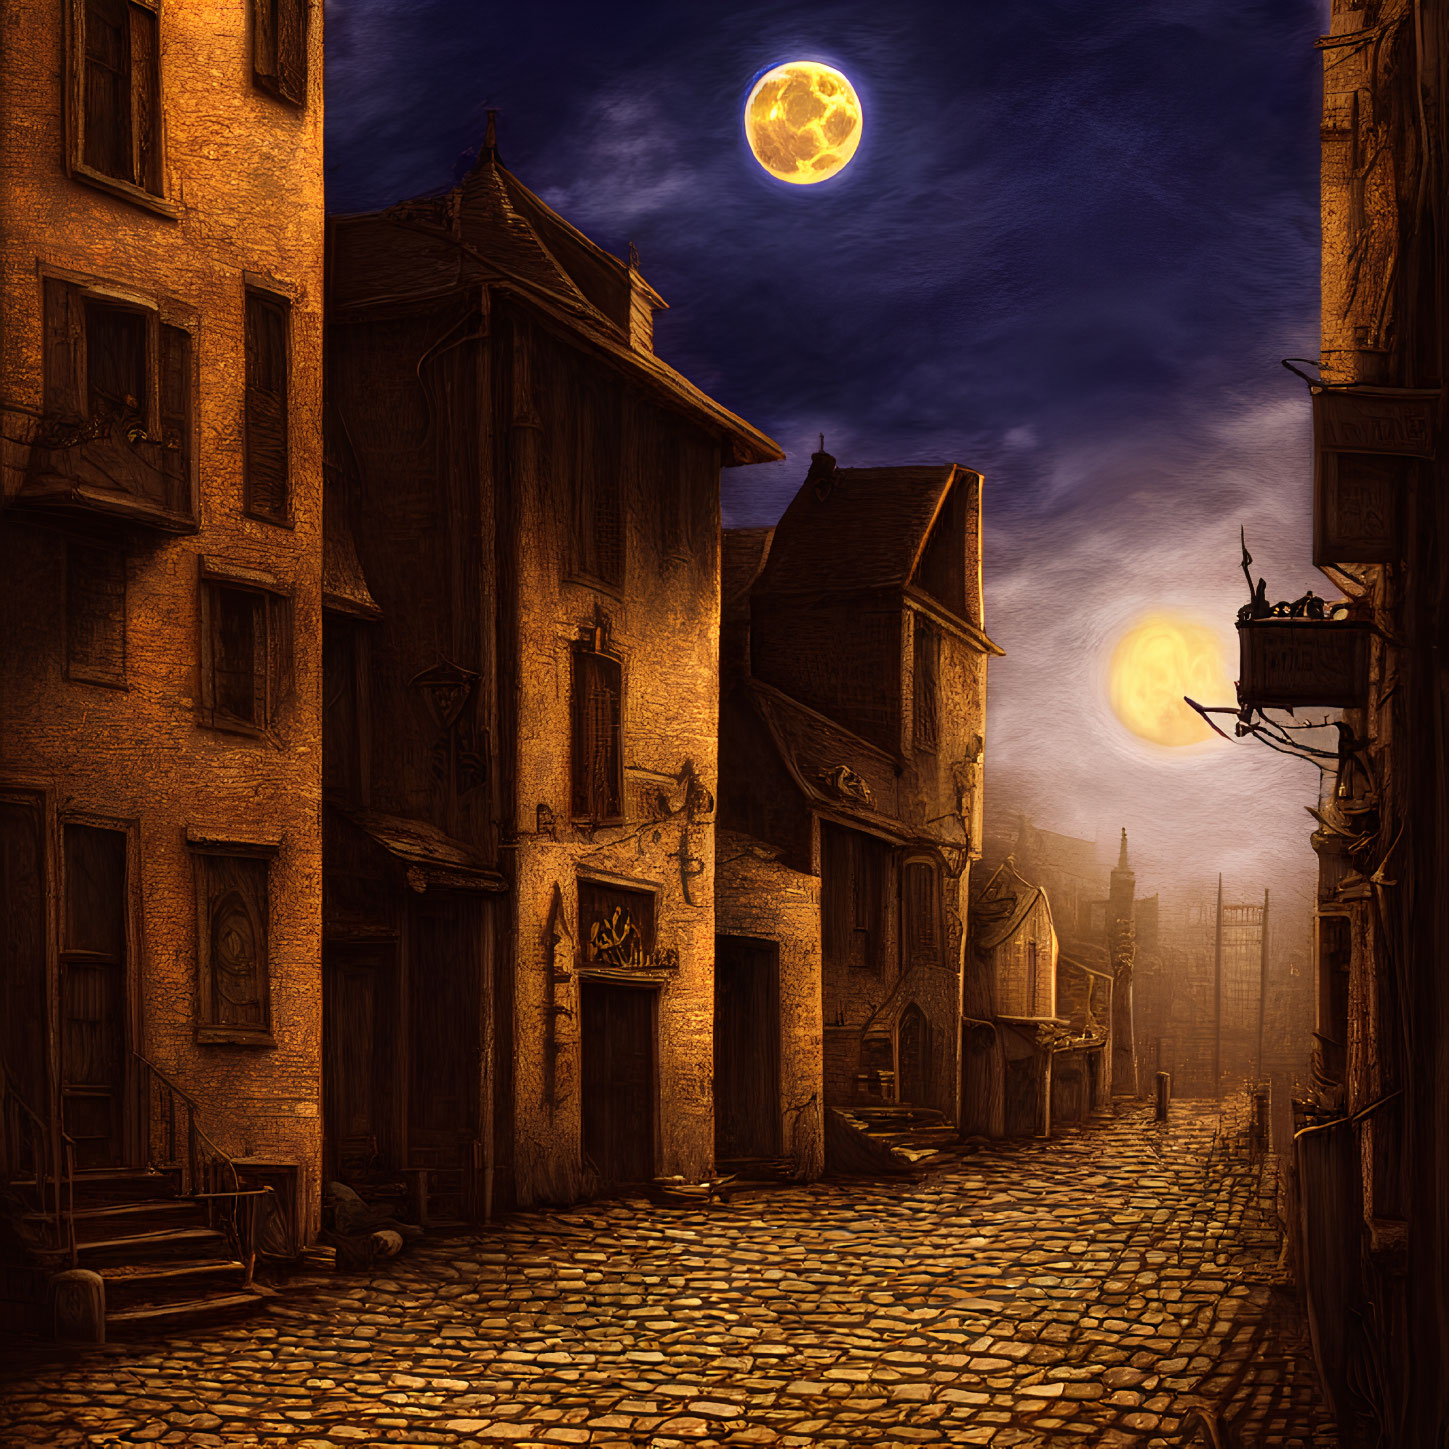 Nighttime cobblestone street with illuminated old buildings under full moon